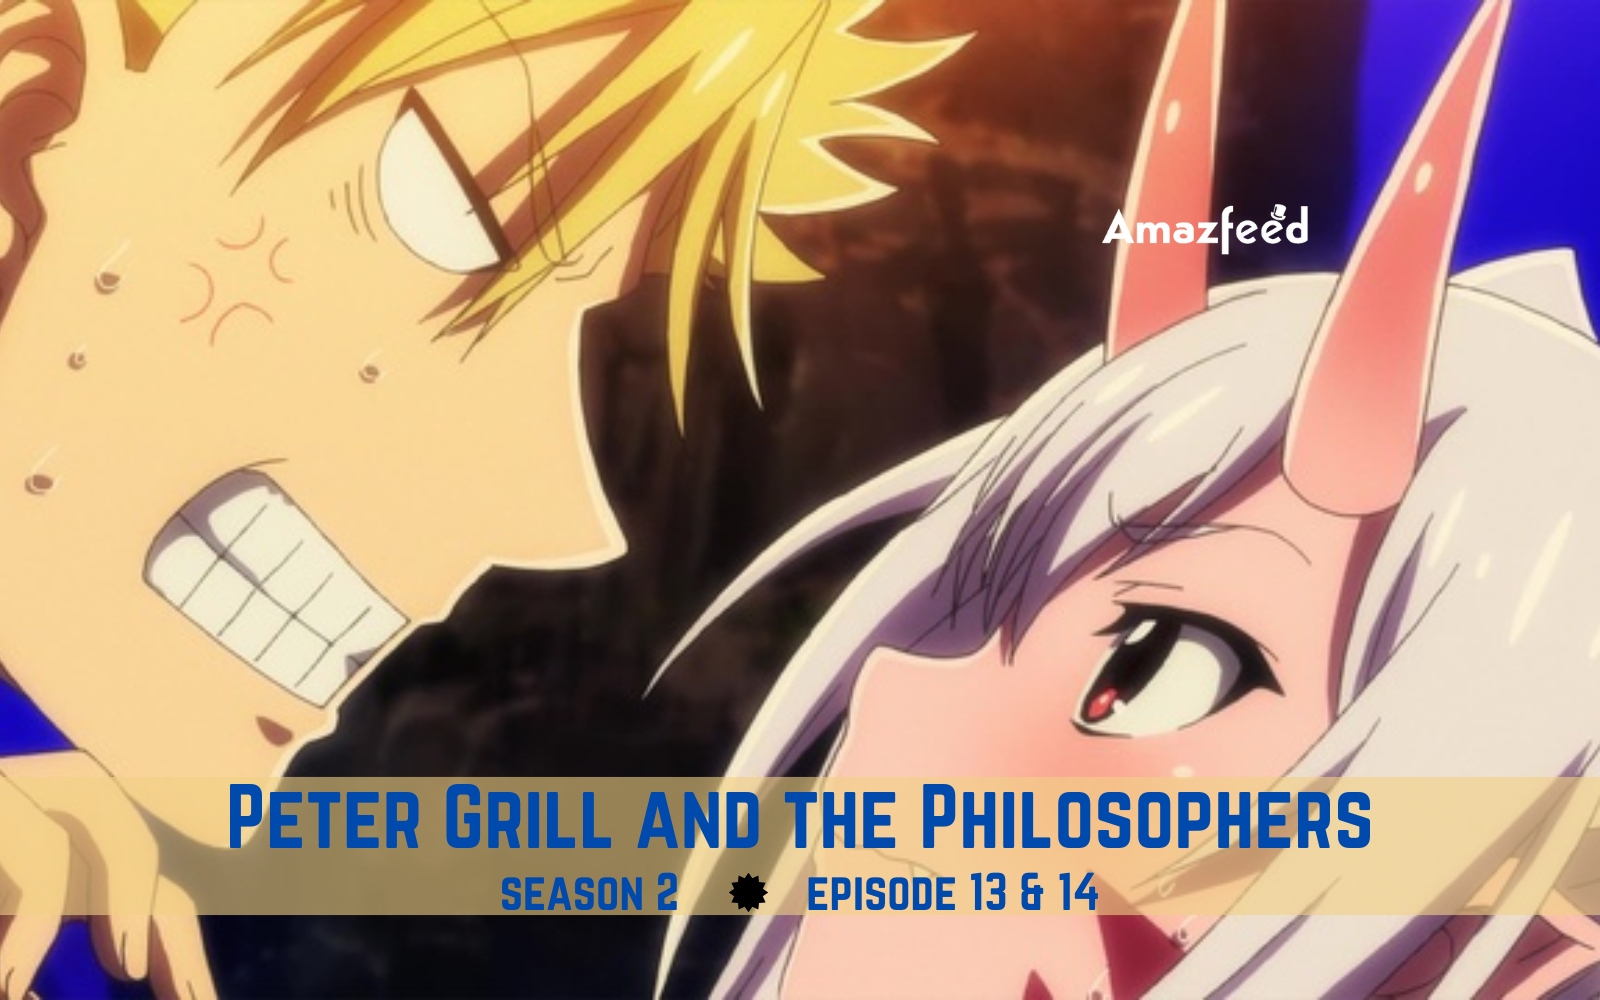 Peter Grill And The Philosopher's Time Temporada 2 Episodio 5: Avance de la  fecha de lanzamiento y spoilers - All Things Anime